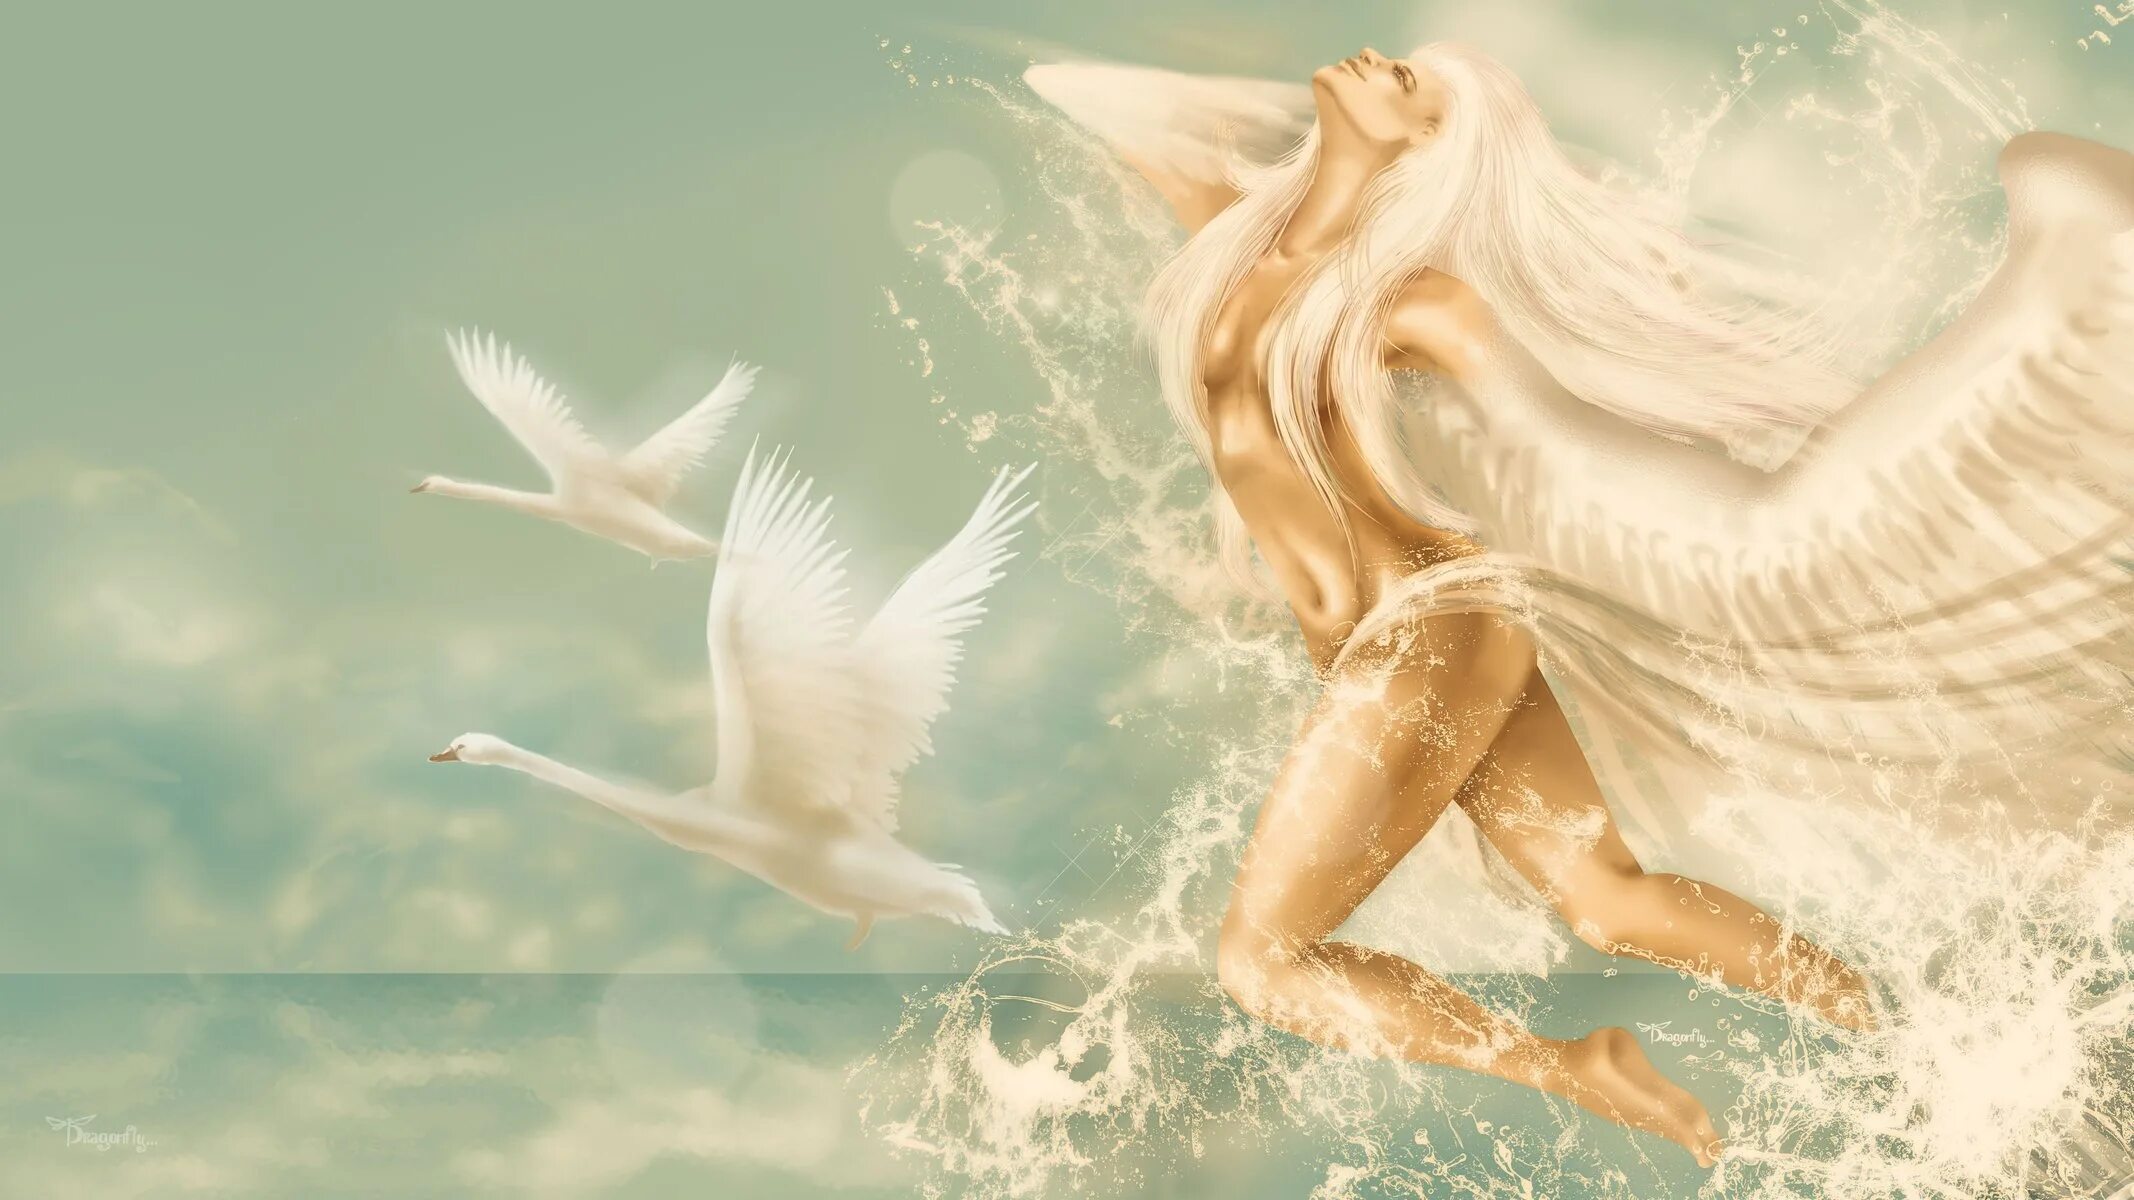 Девушка - ангел. Девушка с крыльями. Девушка лебедь. Девушка с крыльями лебедя.